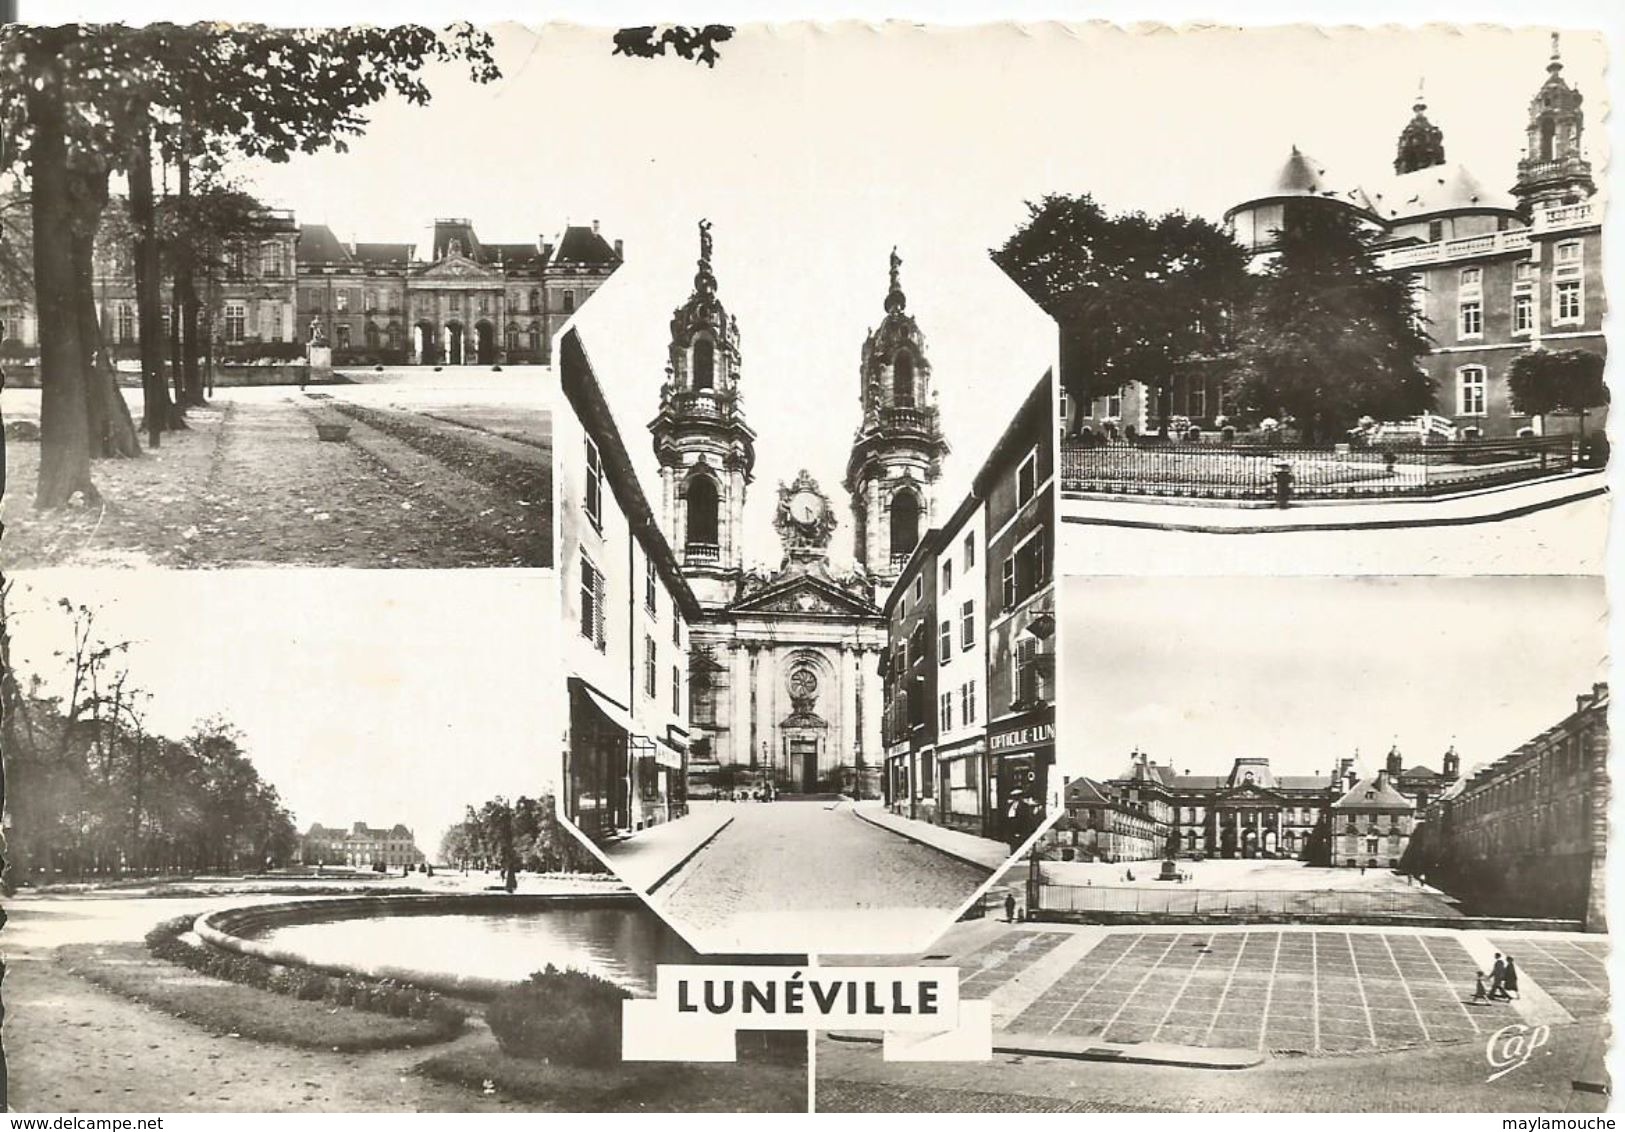 Luneville - Luneville